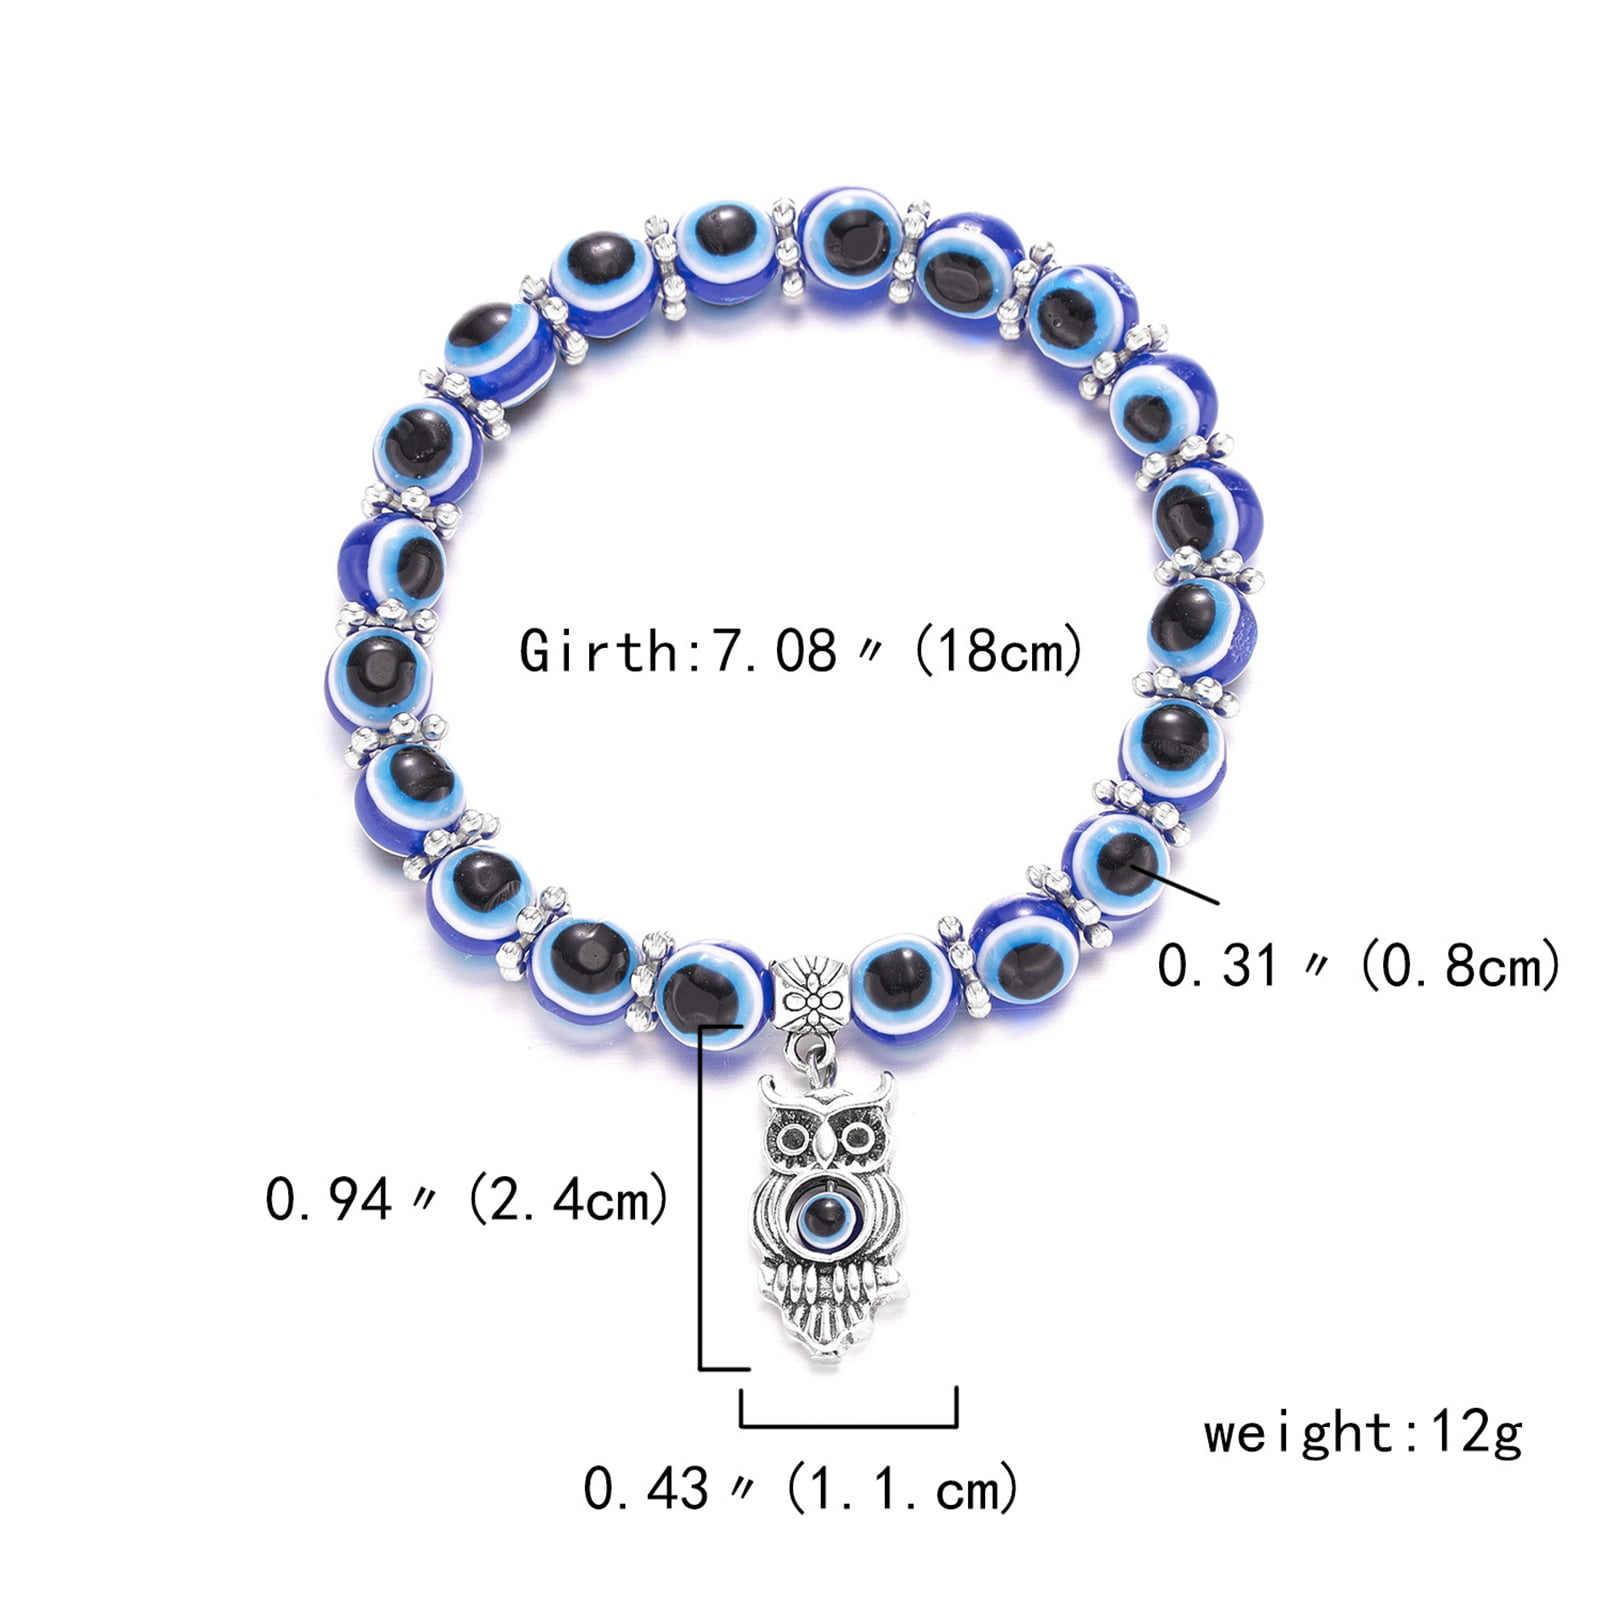 Details about   925 Sterling Silver Handmade Gemstone Turkish Mİx Bracelet Bangle Cuff